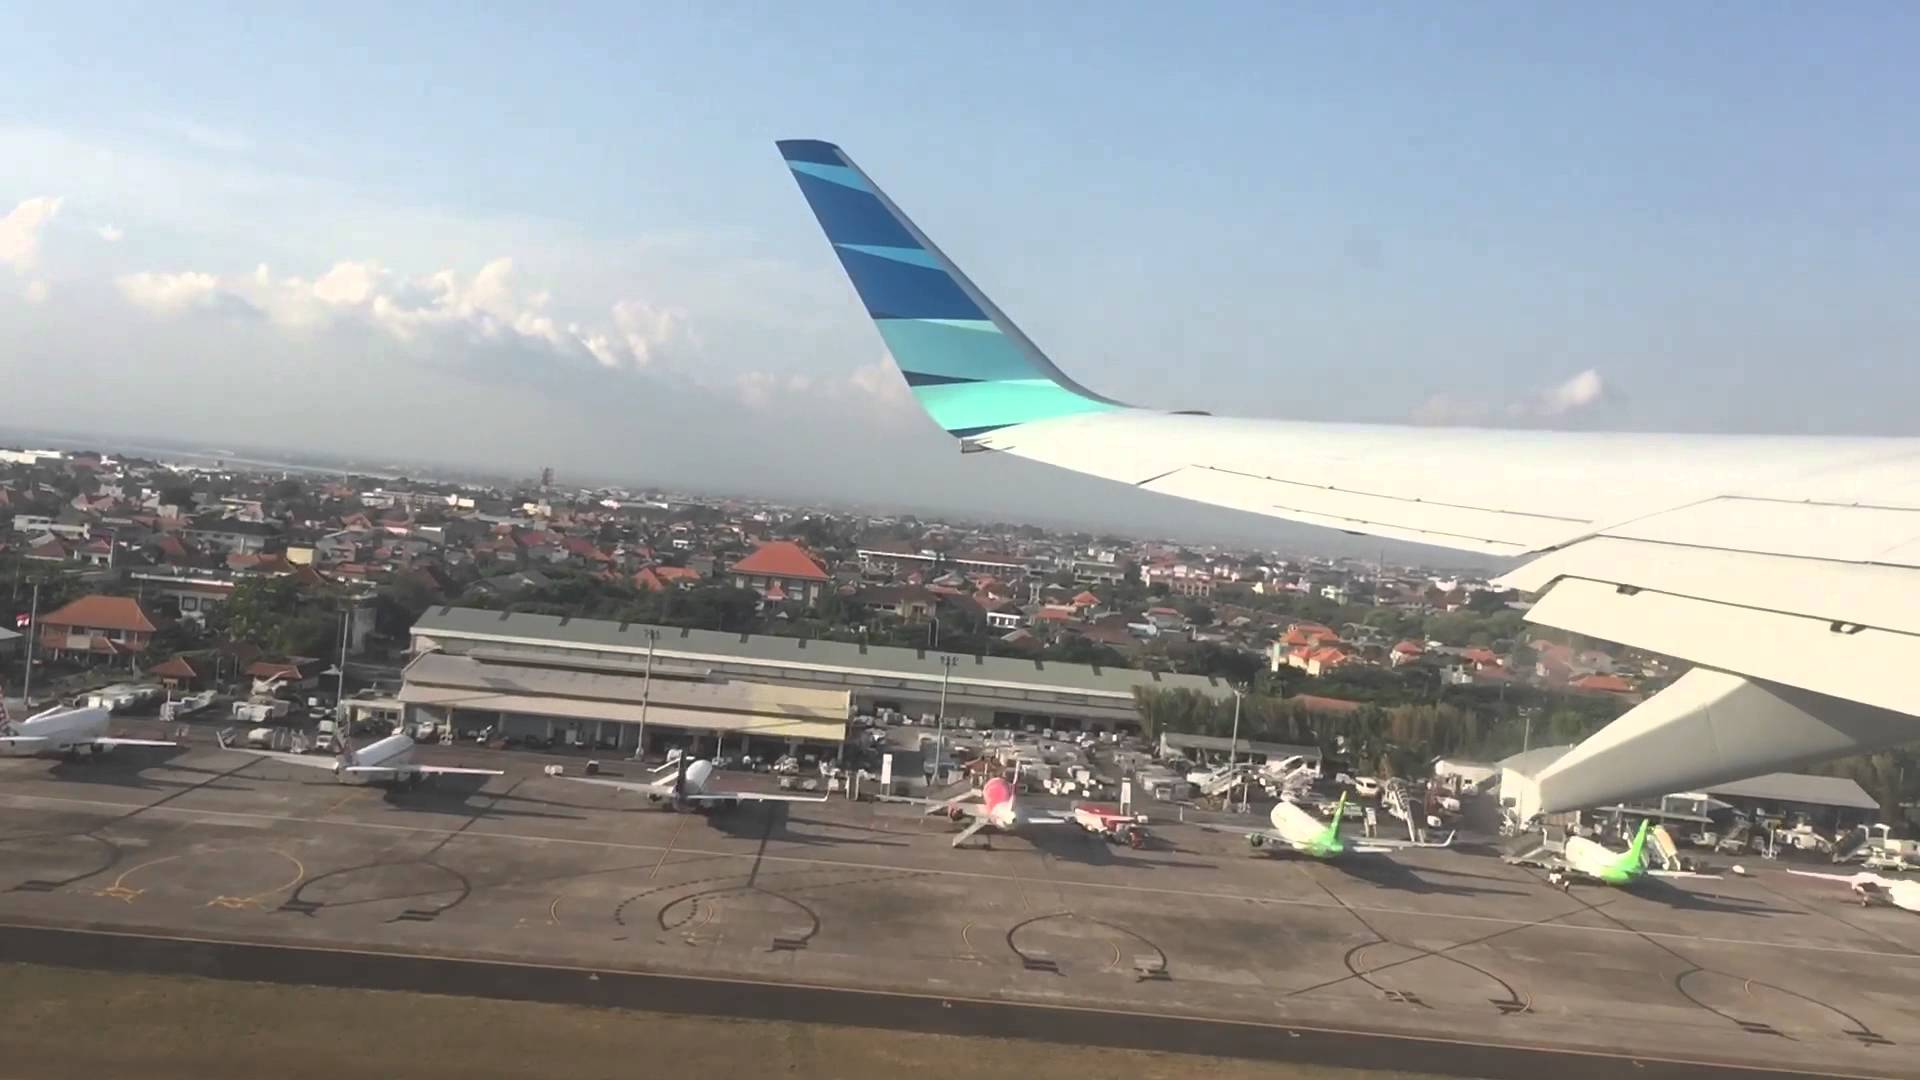 Аэропорт прилета бали: какой международный аэропорт бали денпасар — название, информация